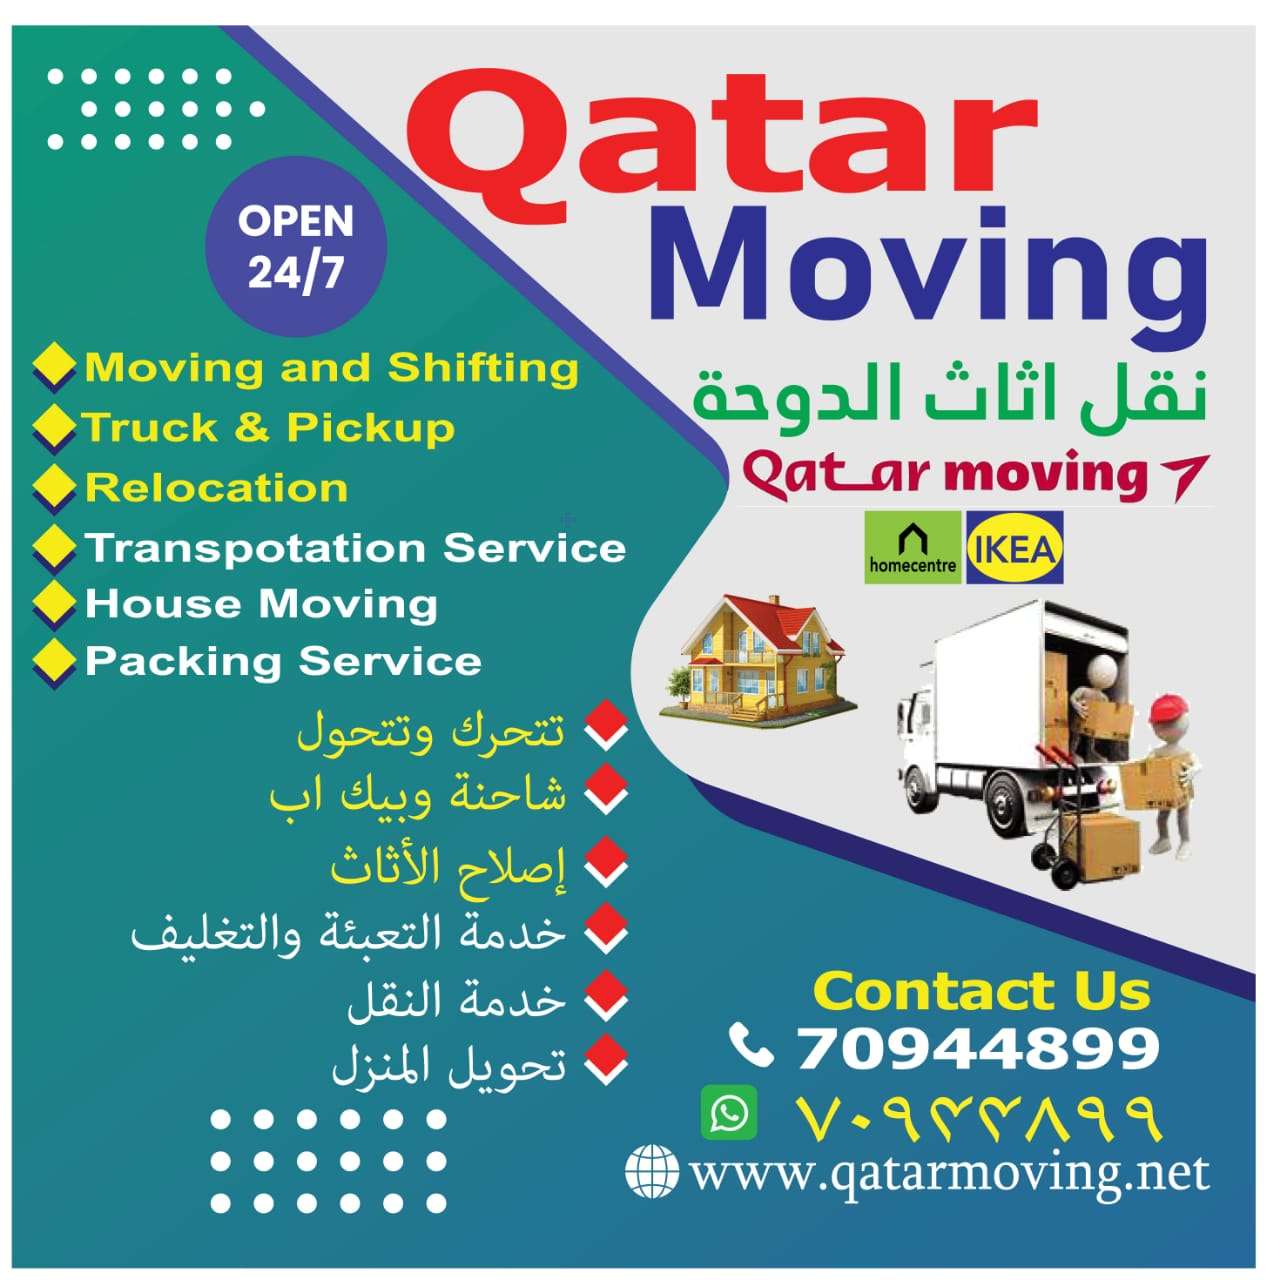 Qatar Moving Service